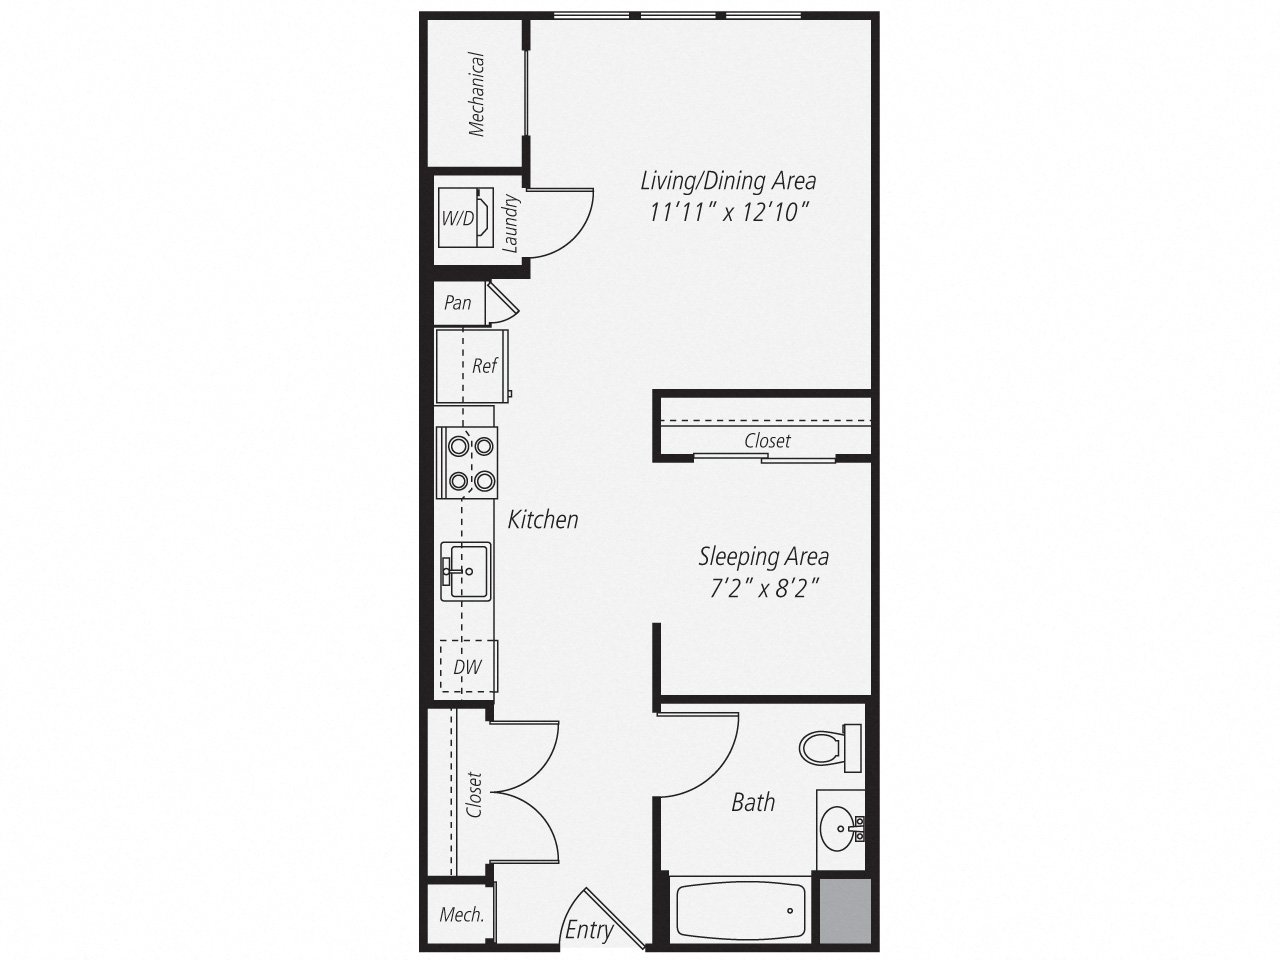 Floorplan for Apartment #232, 0 bedroom unit at Halstead Norwalk